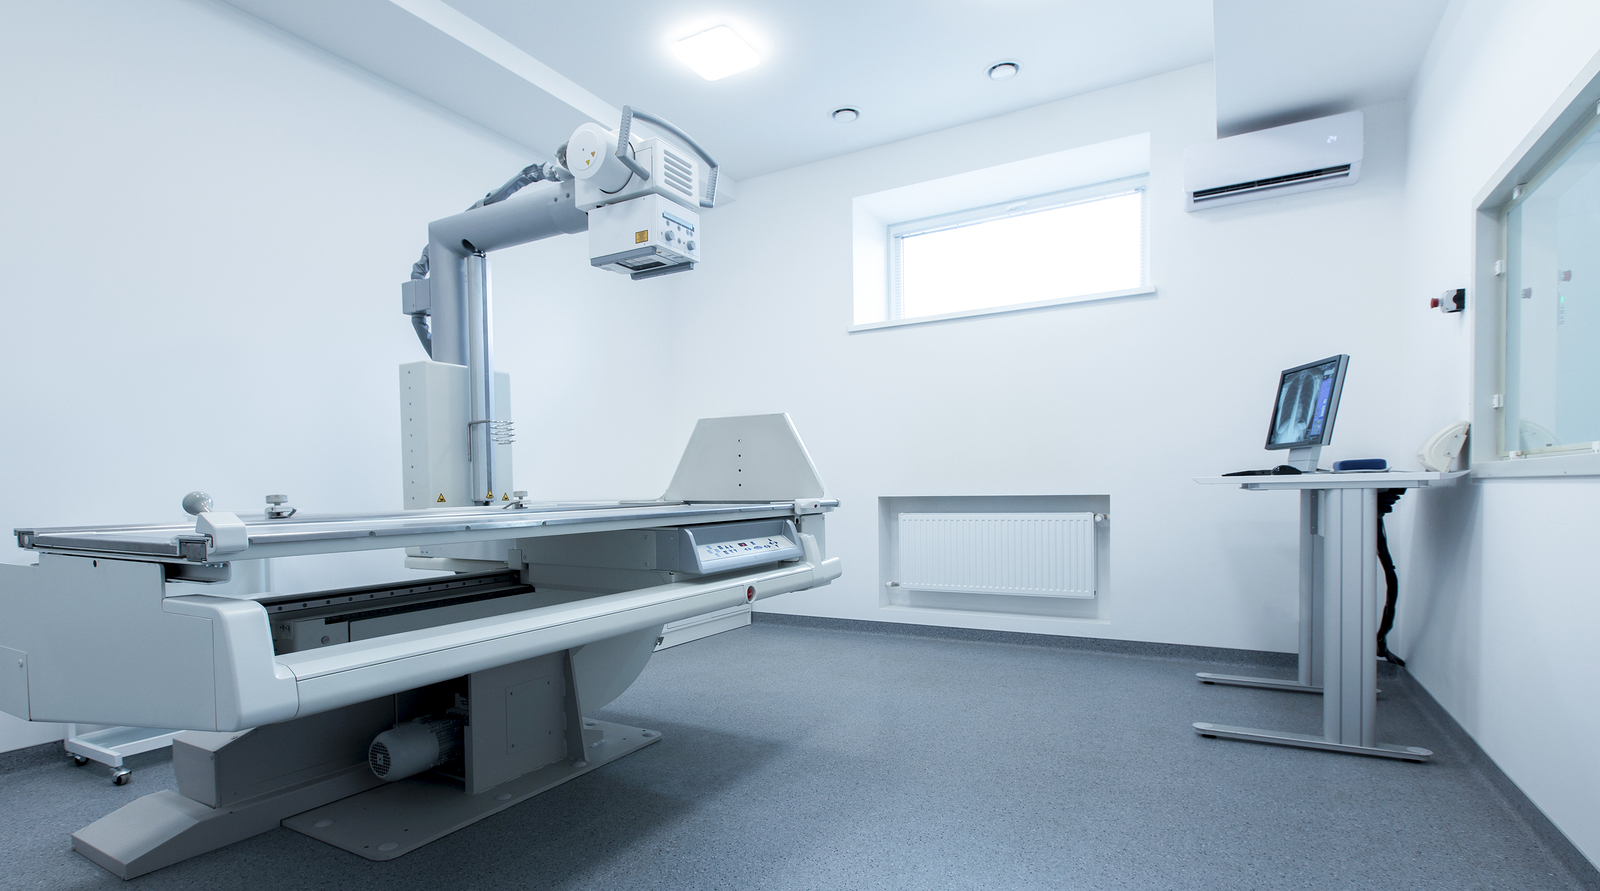 Empty Laboratory Room With Big Modern X-ray Machine, Hospital Eq